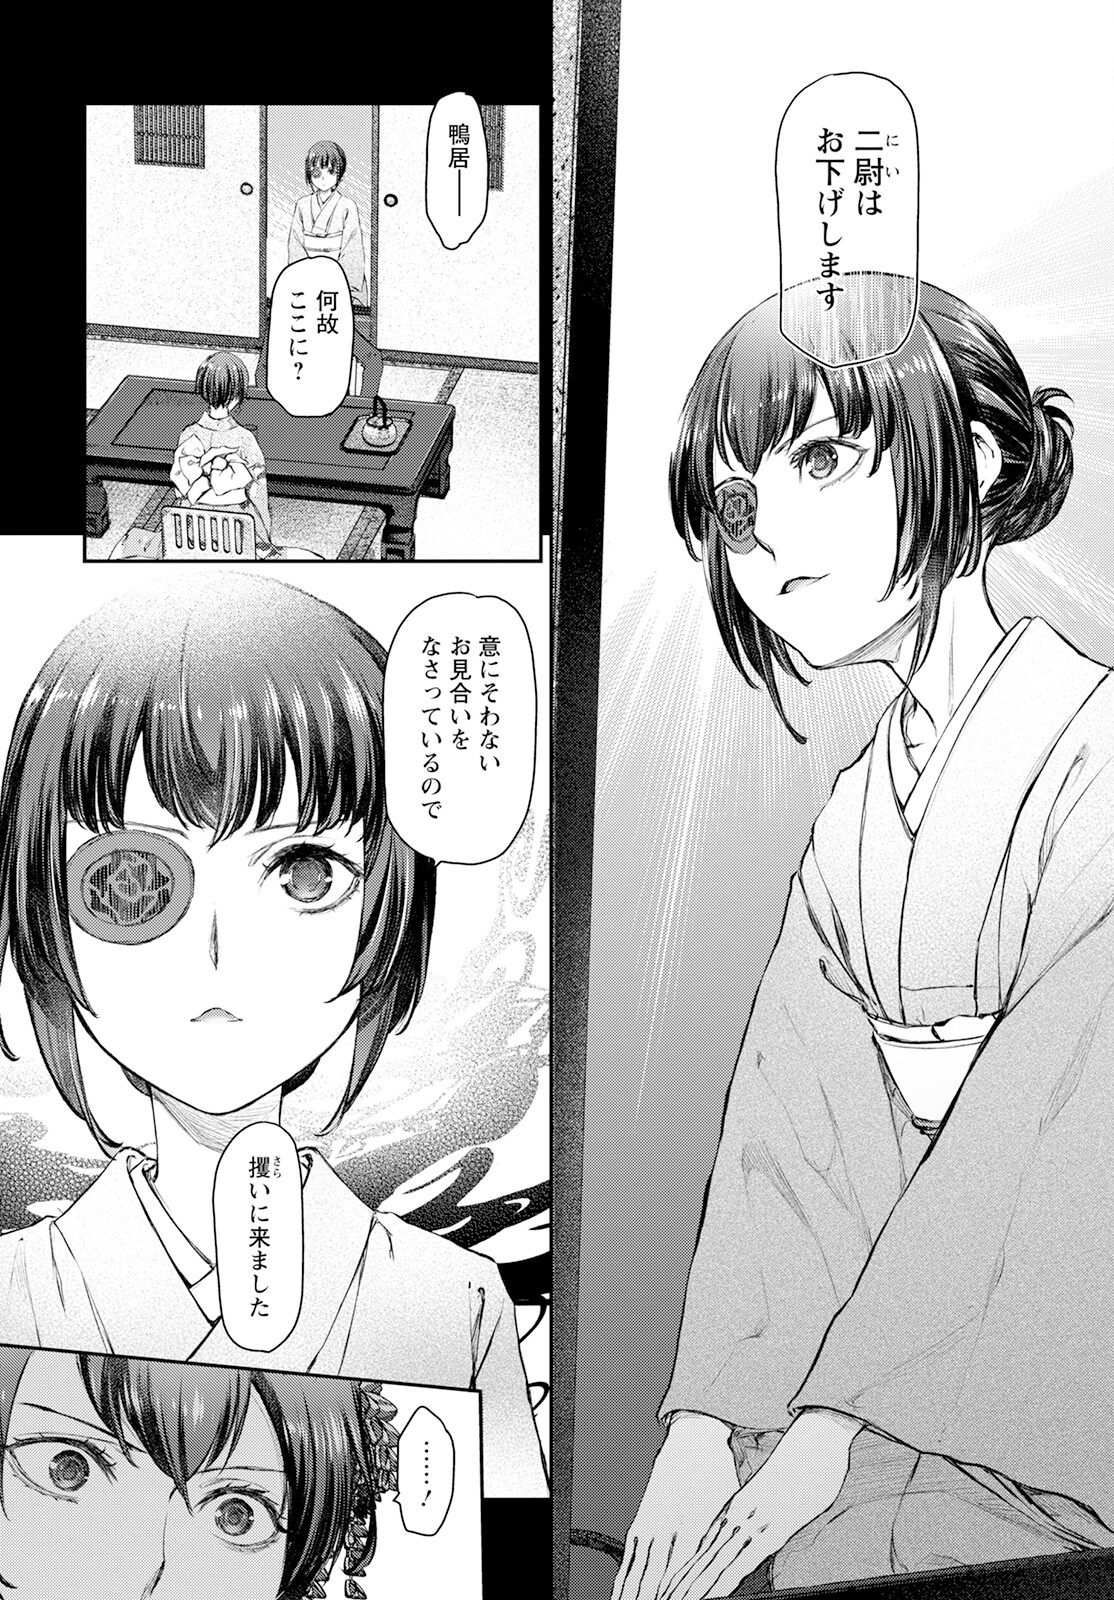 Uchi no Maid ga Uzasugiru! - Chapter 56 - Page 8